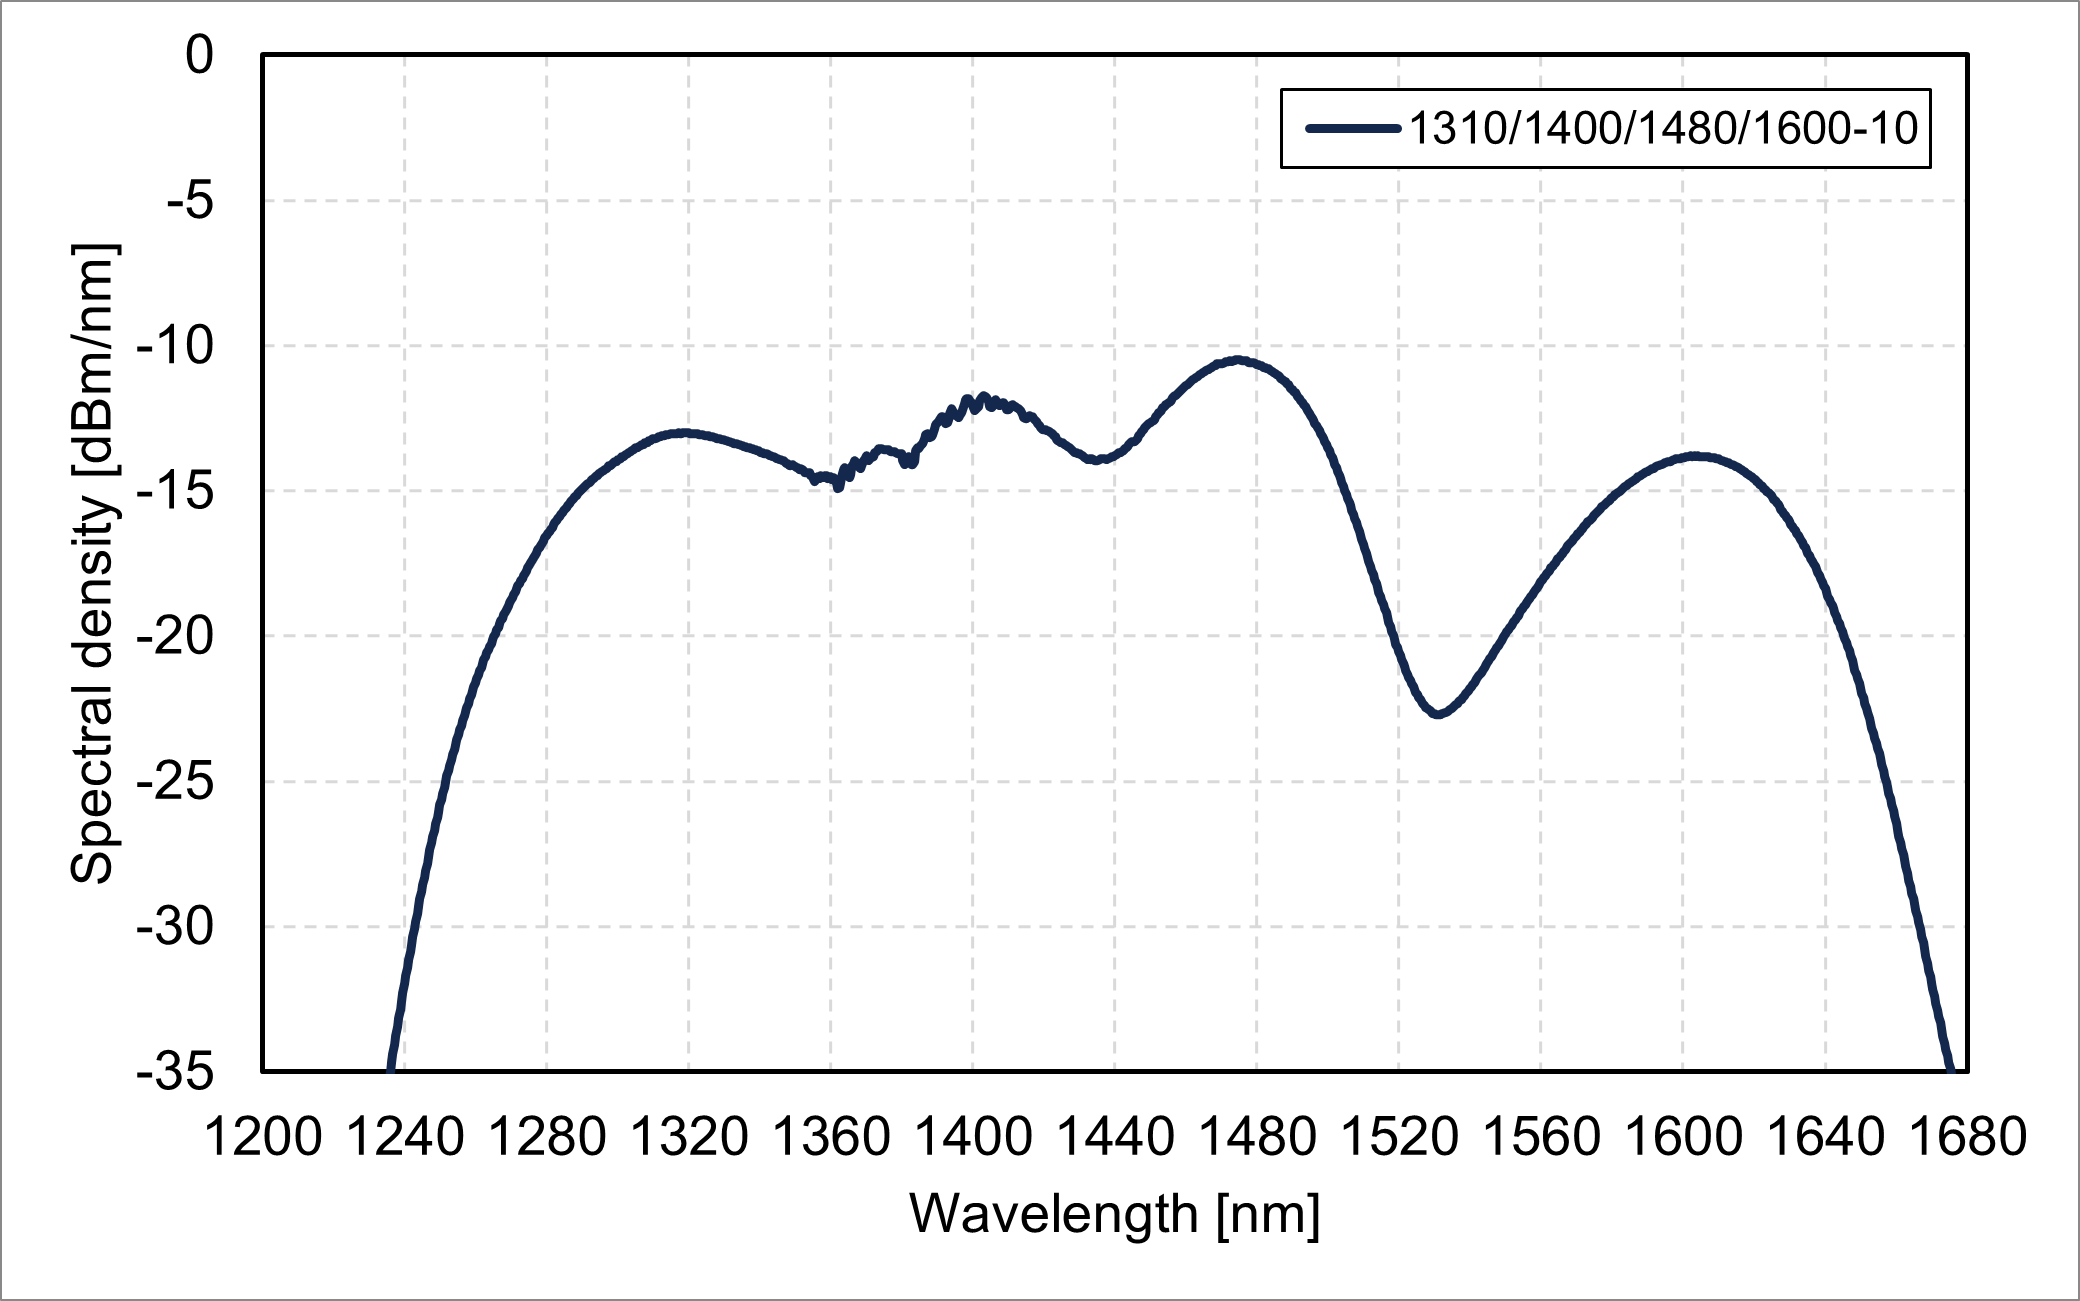 Spectral density vs. wavelength (1310/1400/1480/1600-10)